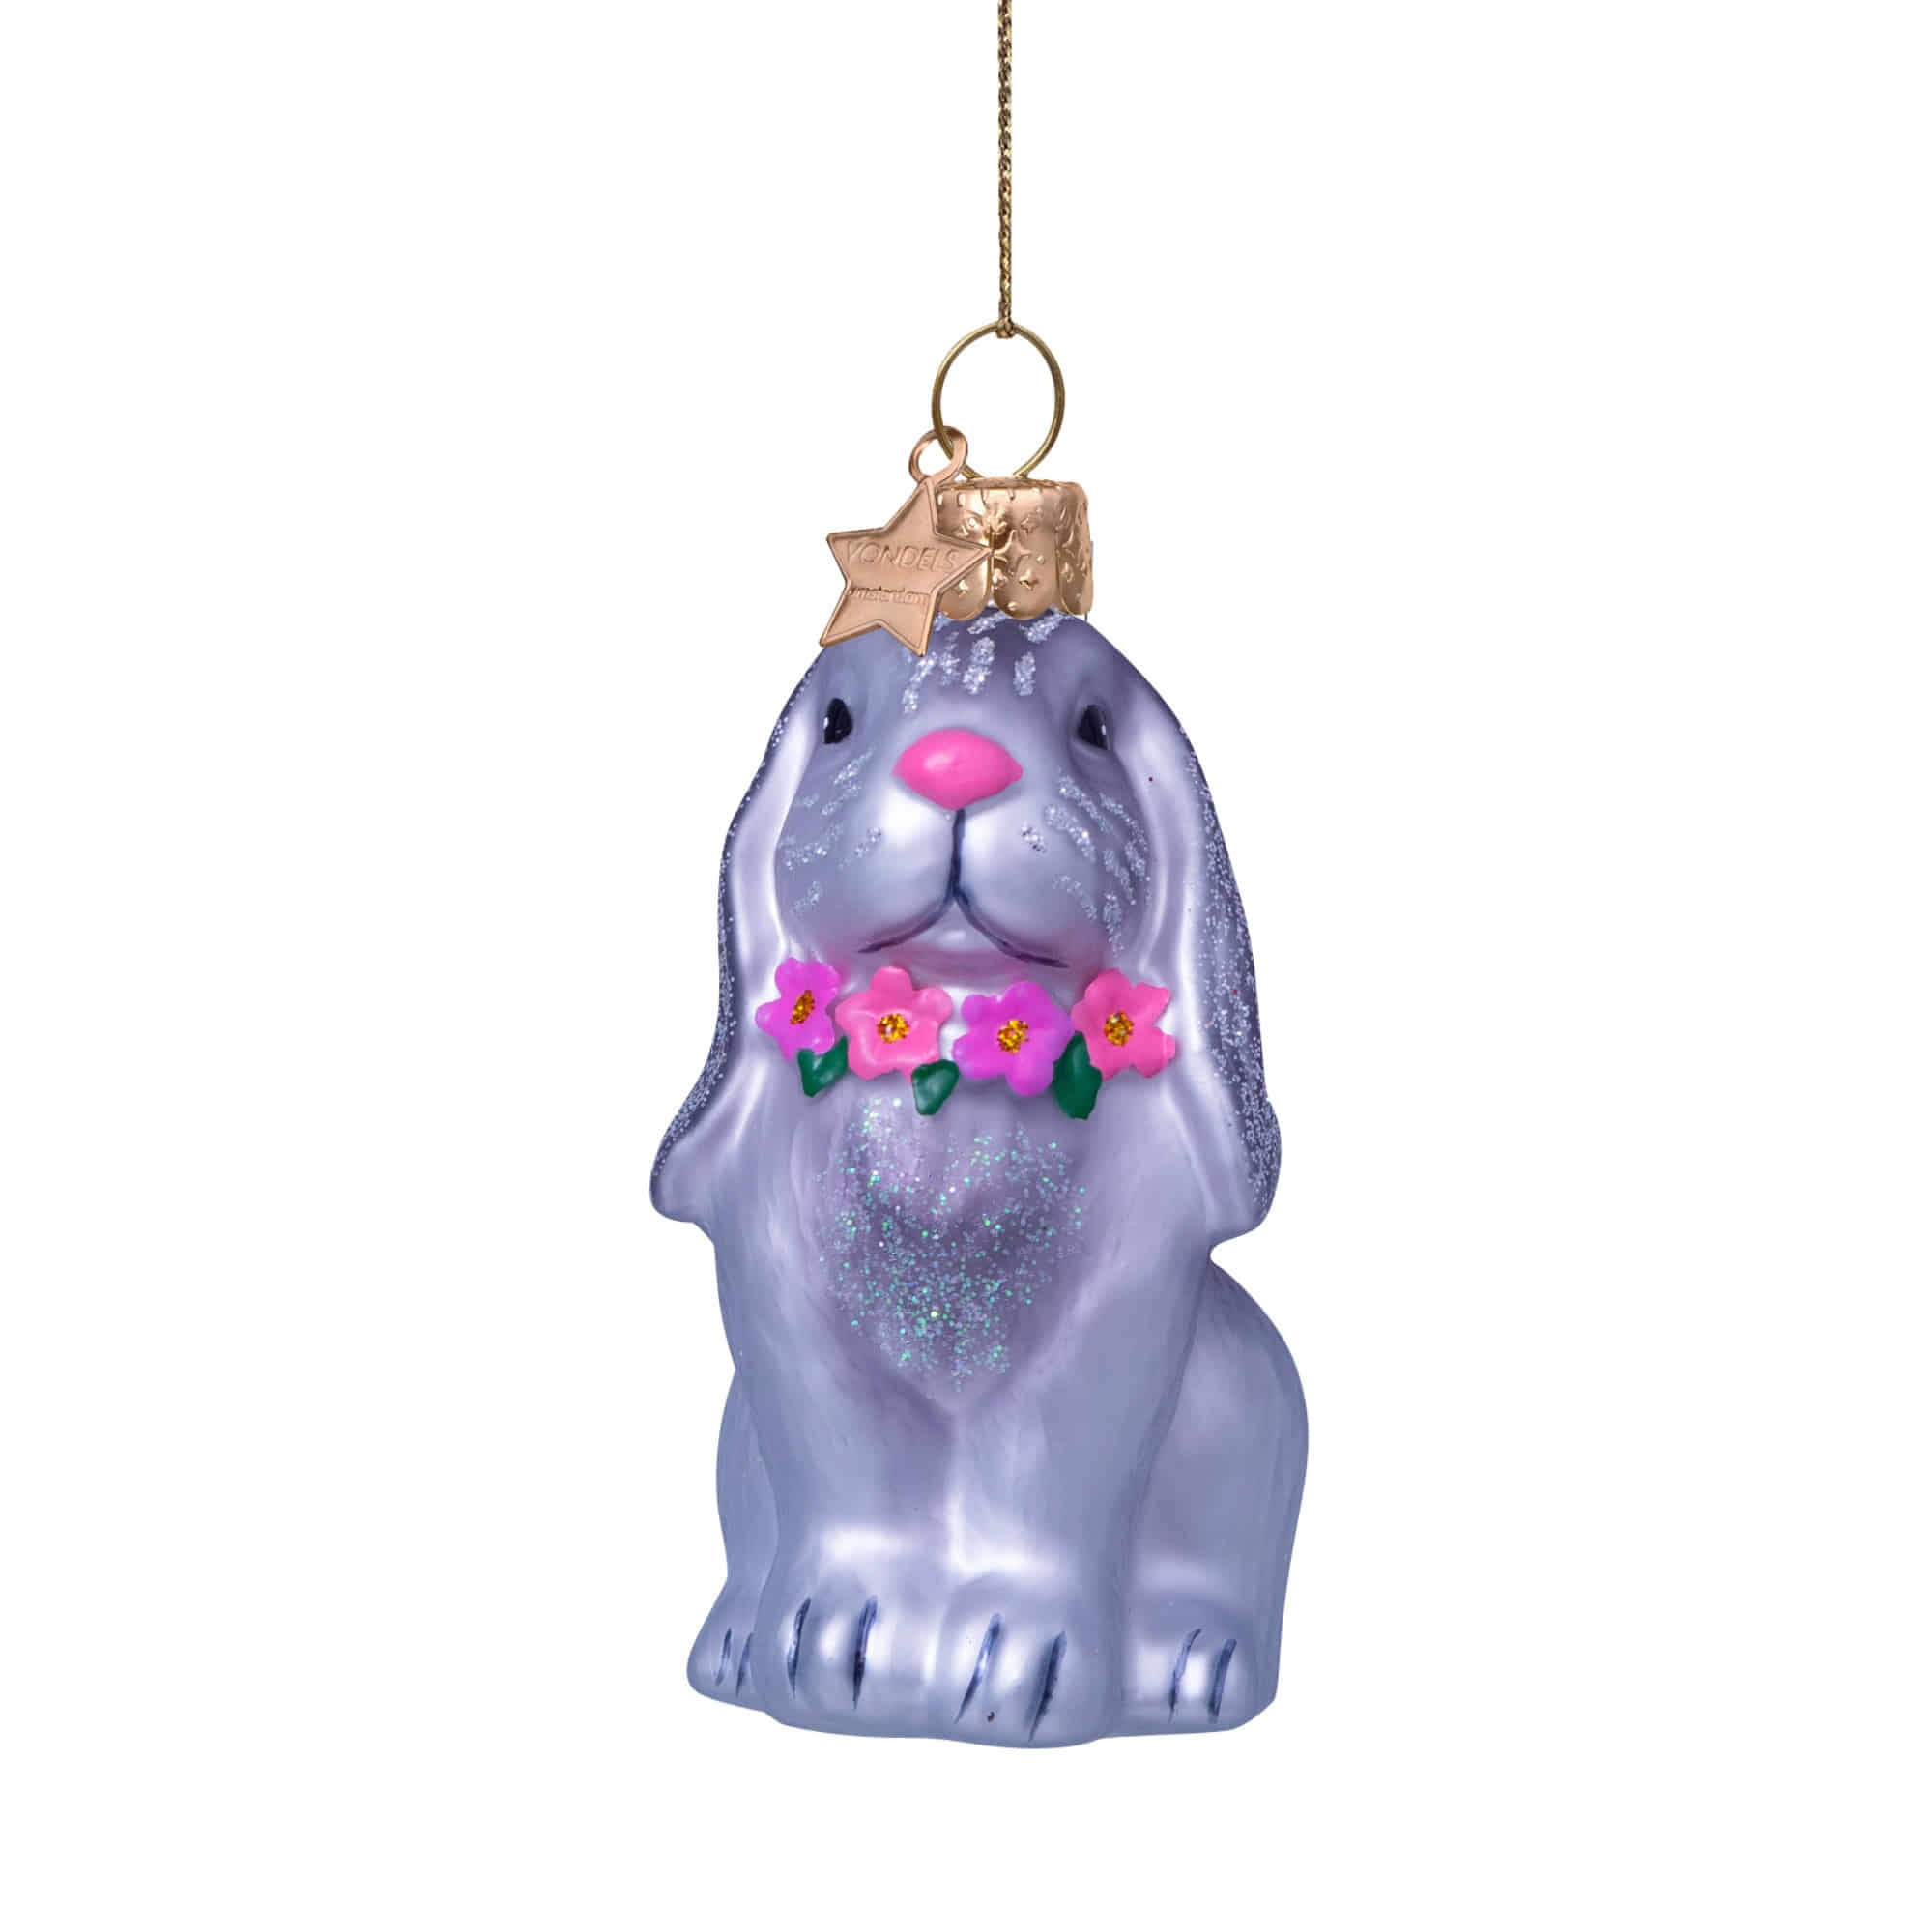 VONDELS Ornament Glass Grey Rabbit with Flower Necklace